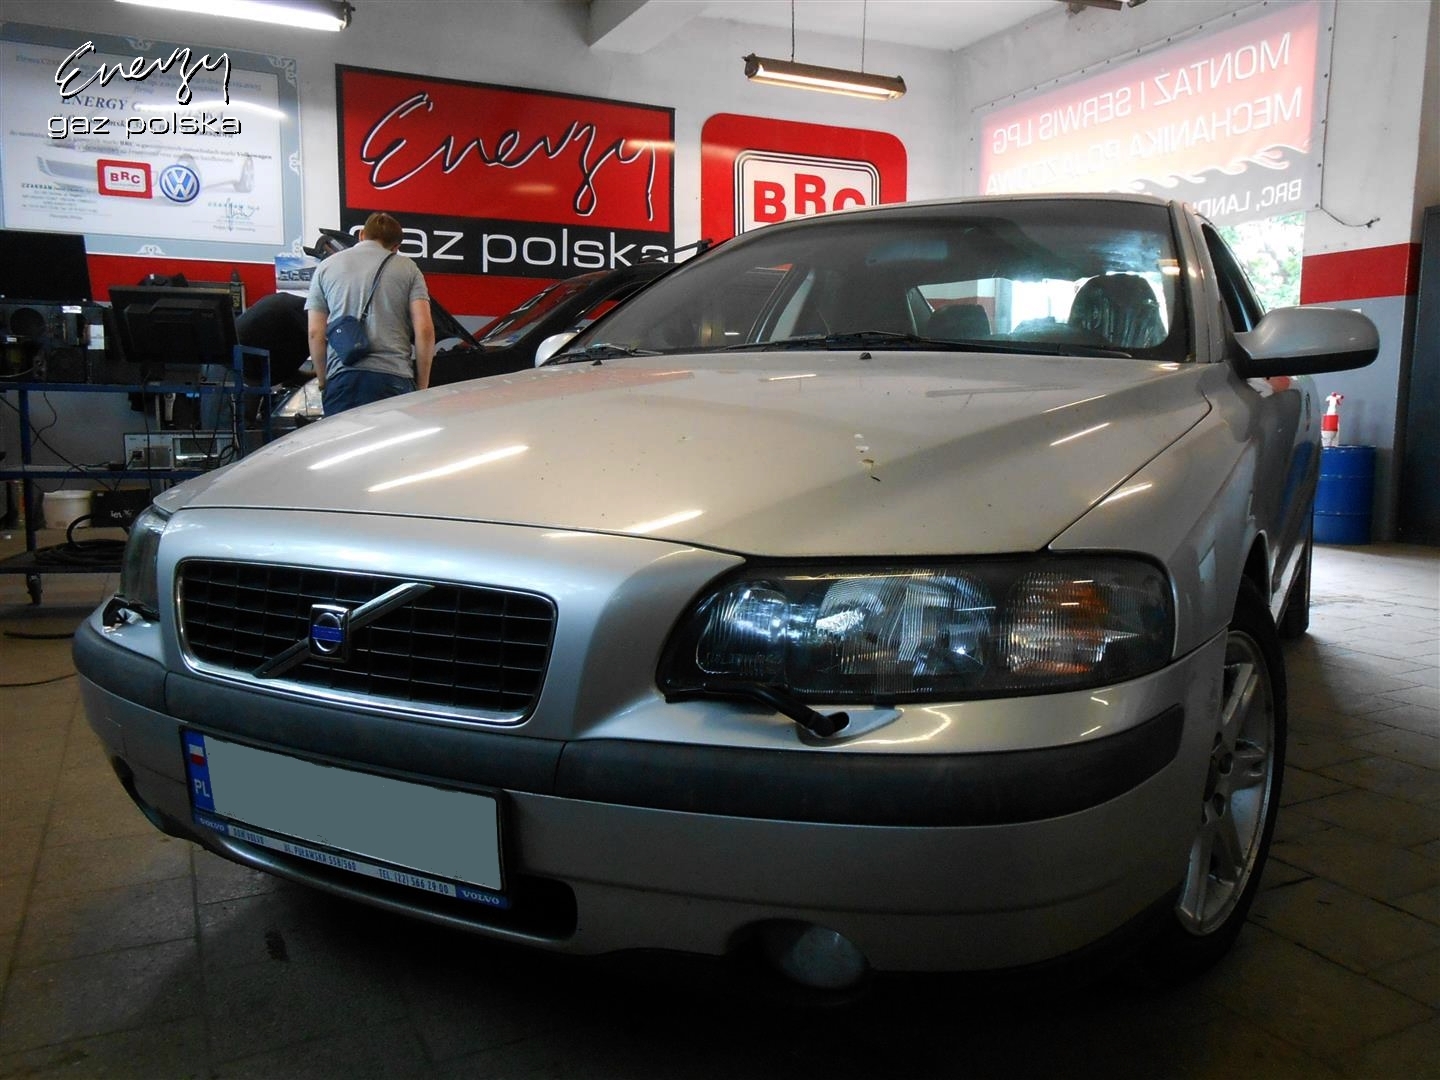 Galeria LPG Volvo S40 2.4 2003r Energy Gaz Polska